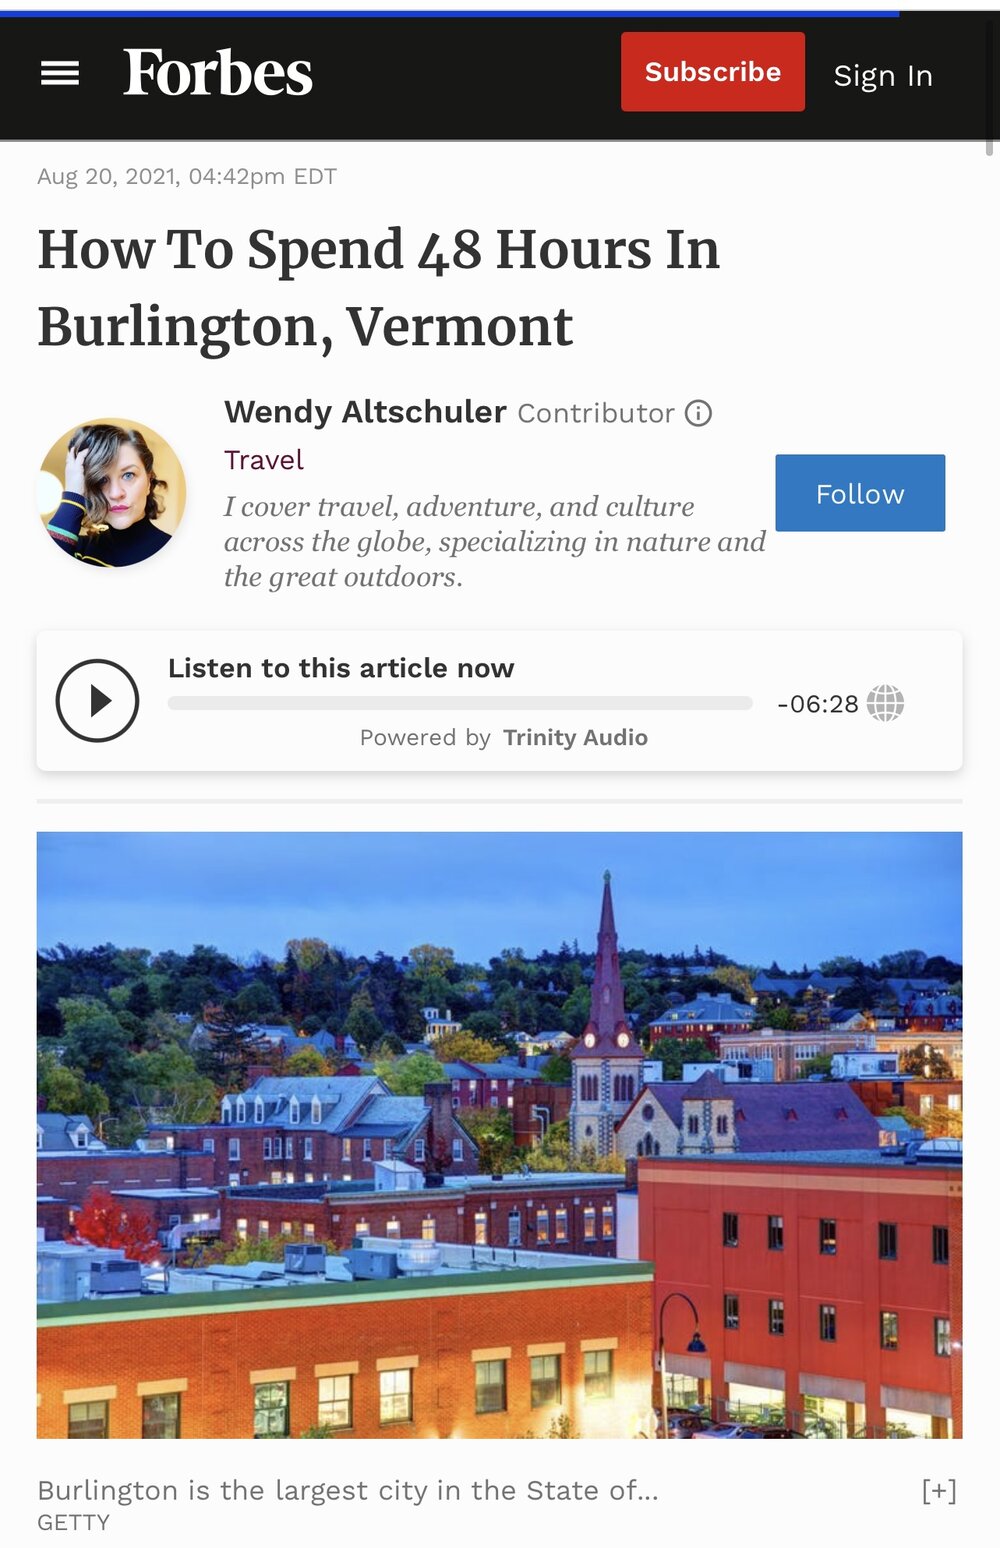 How To Spend 48 Hours In Burlington, Vermont